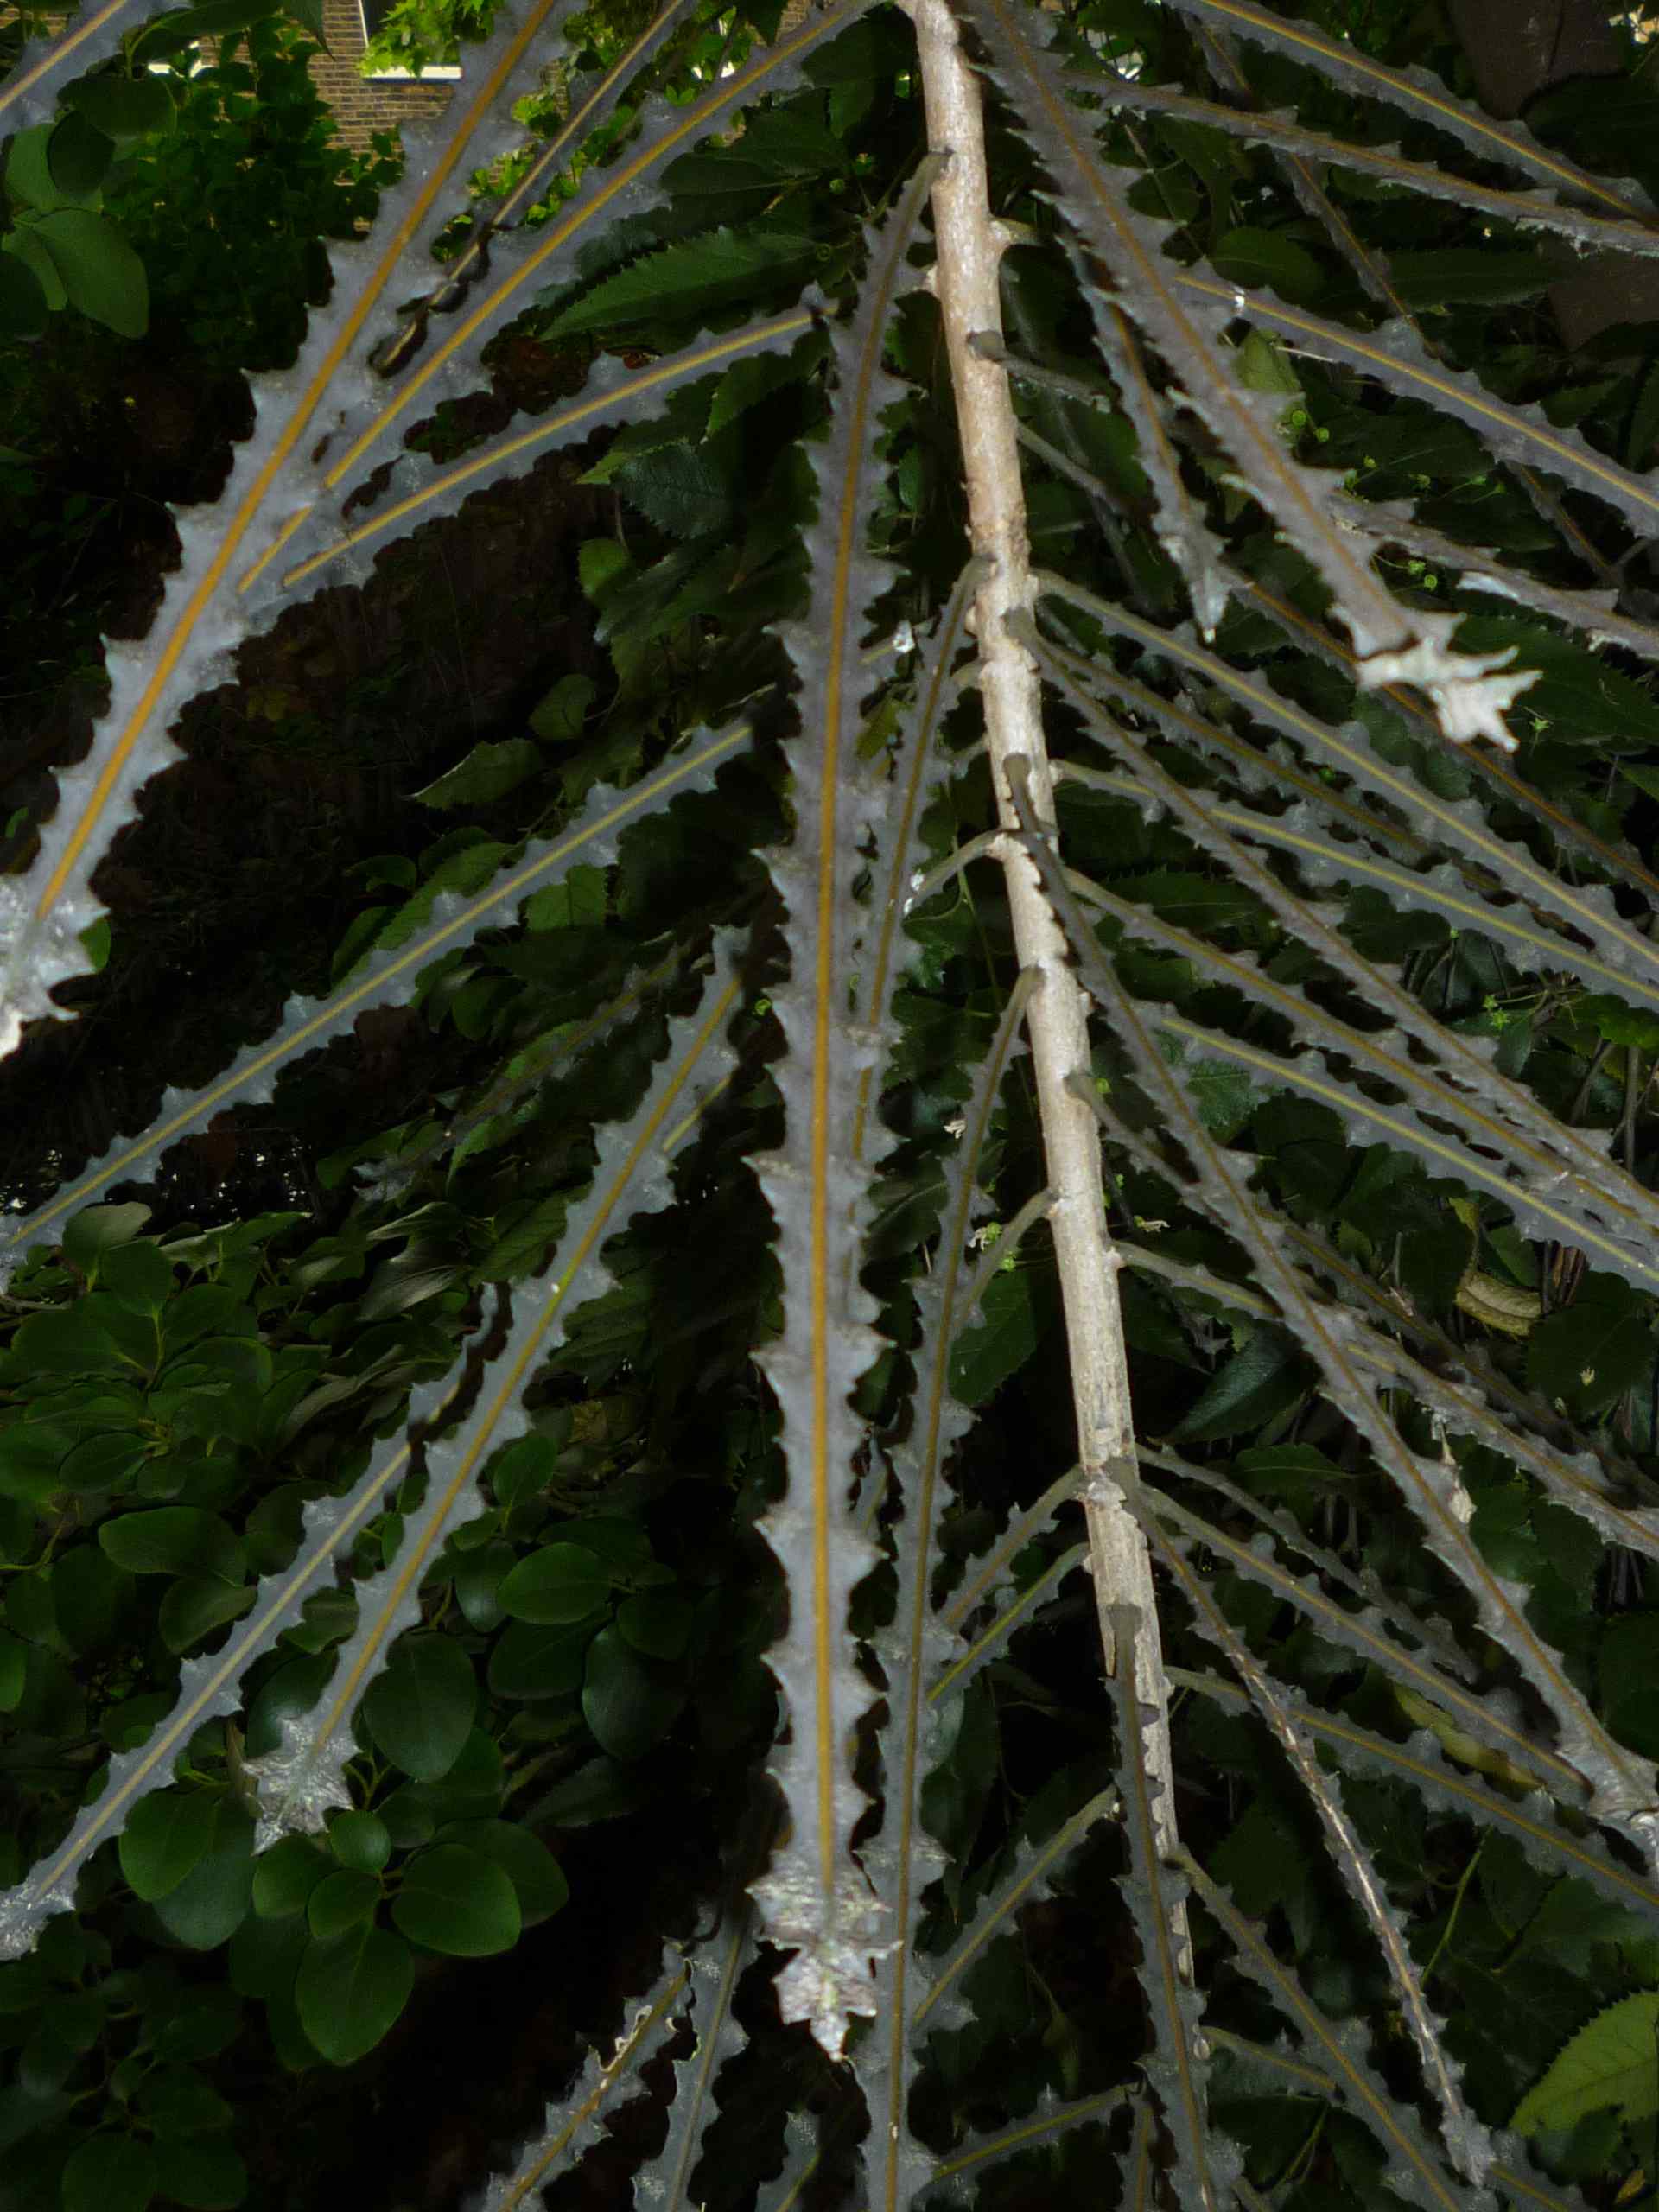 Leaves of Pseudopanax ferox